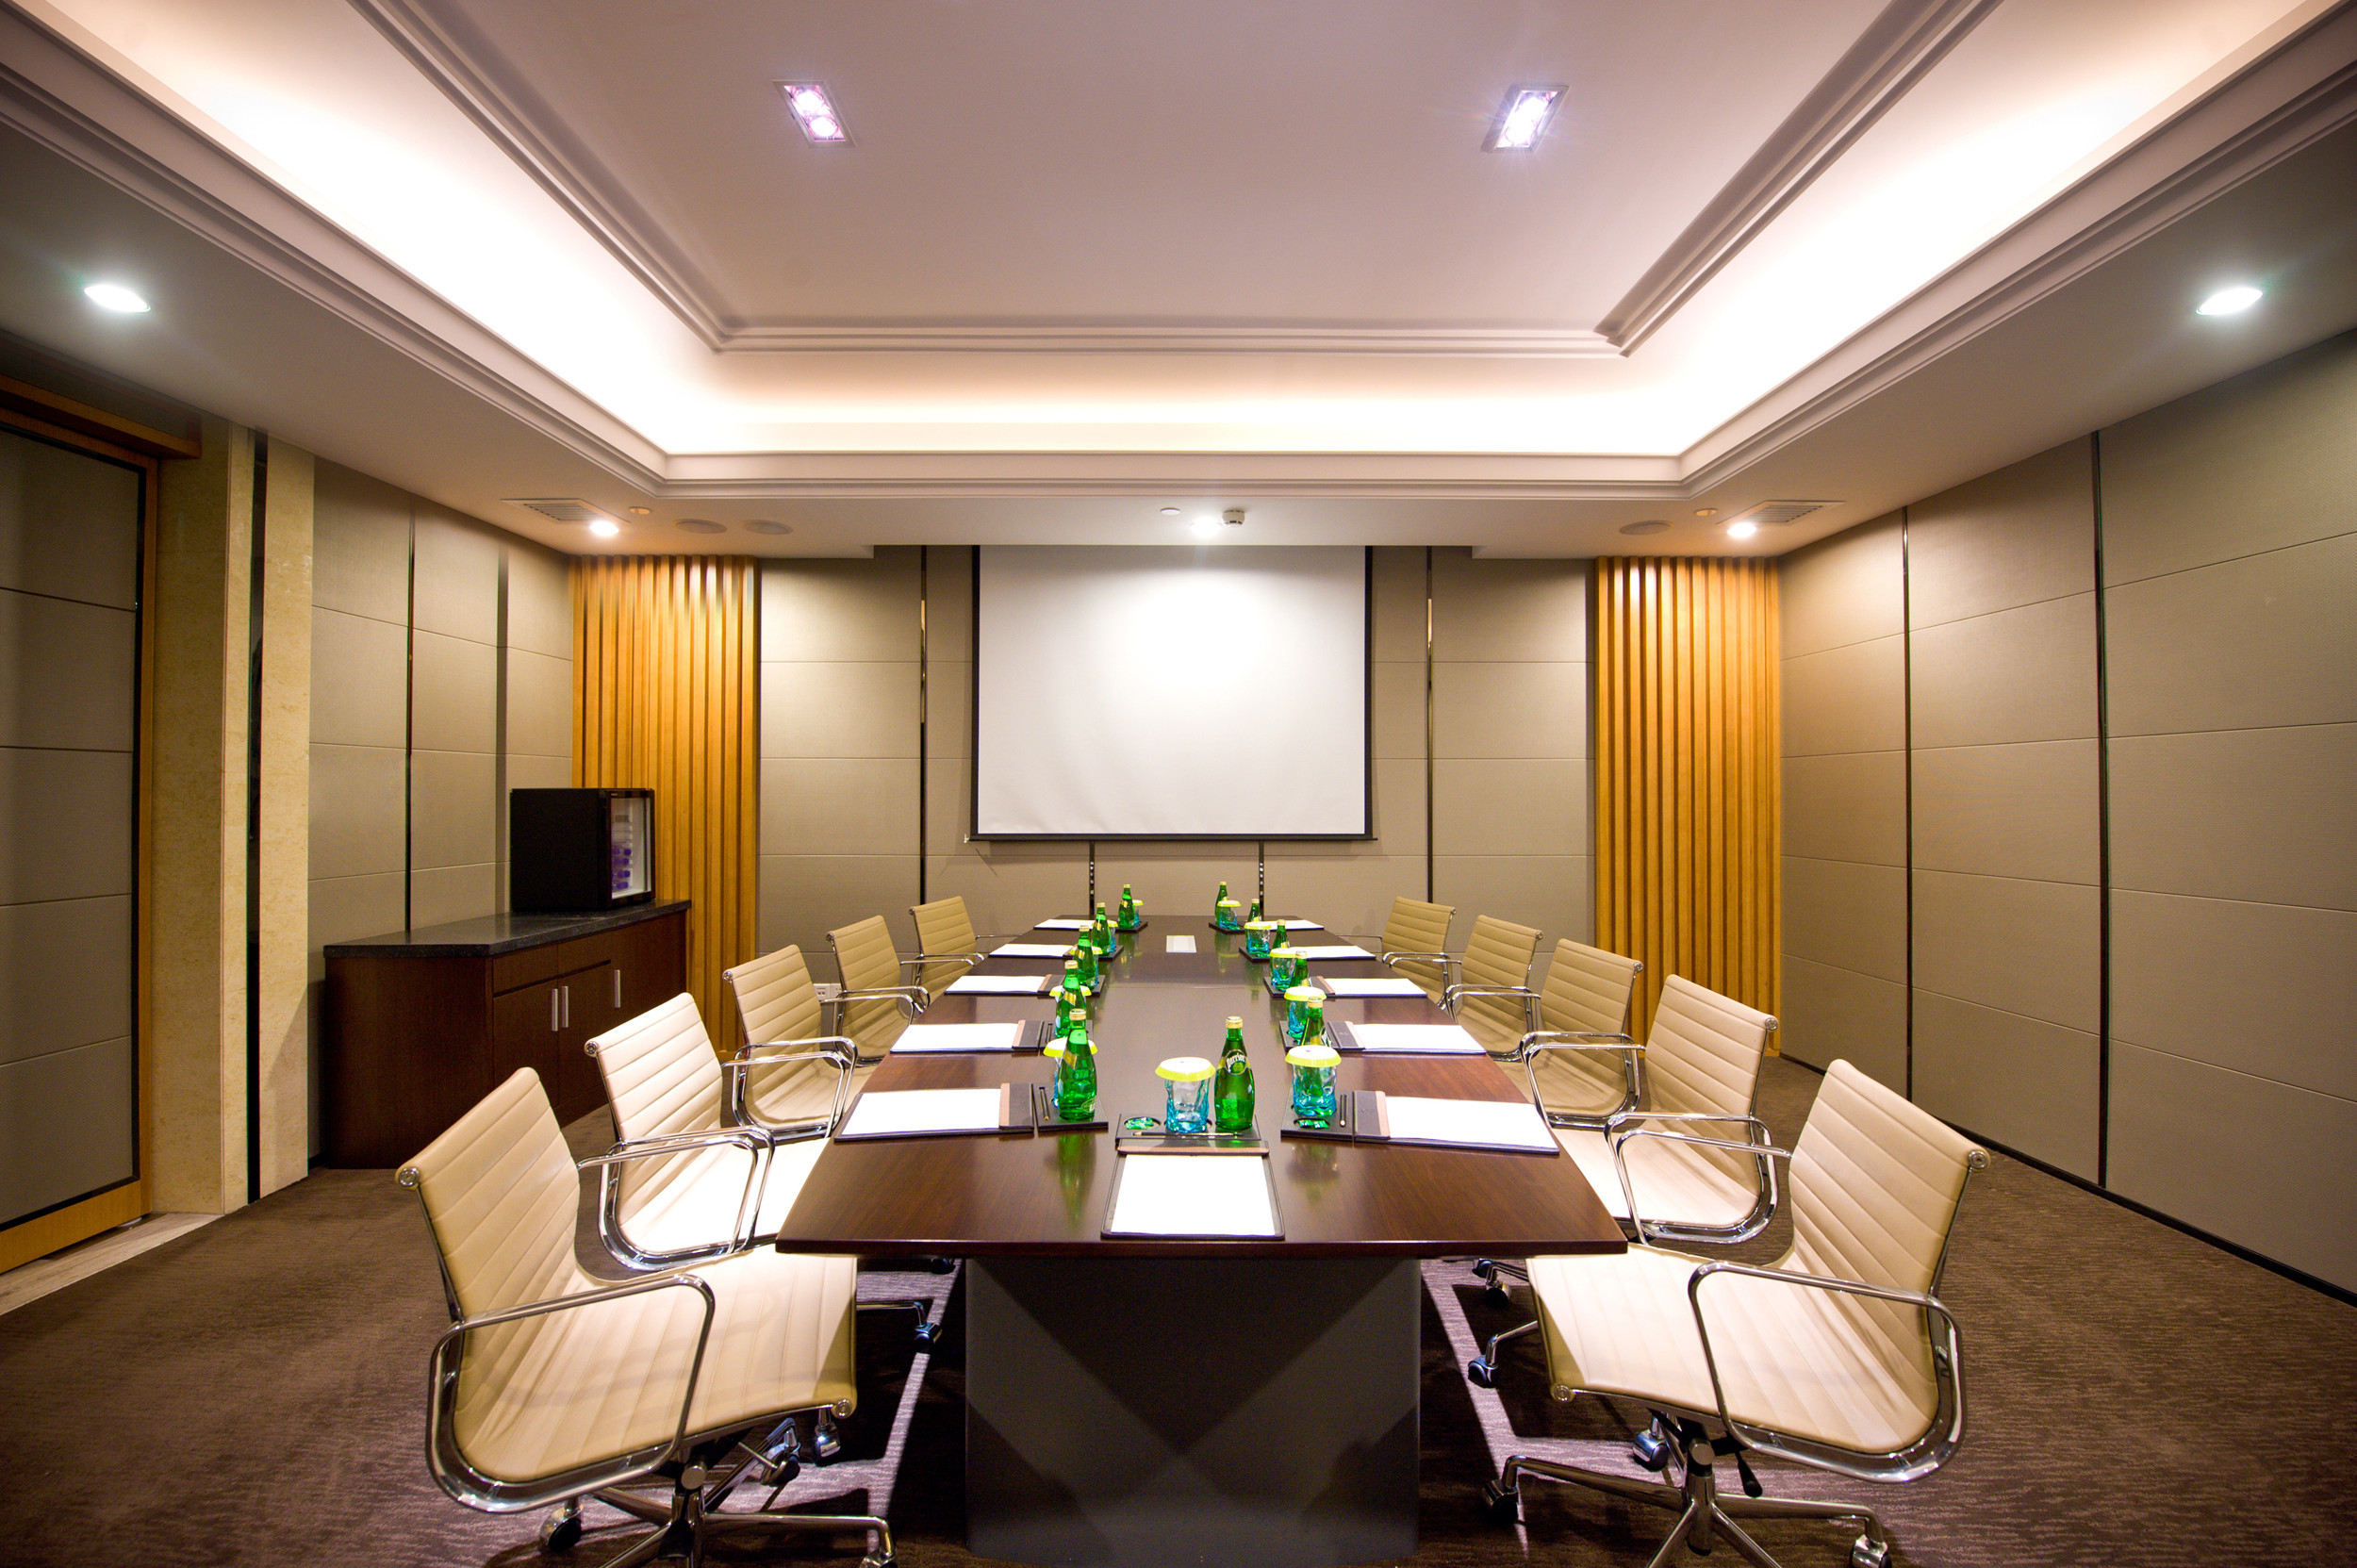 Meeting Room - Boardroom